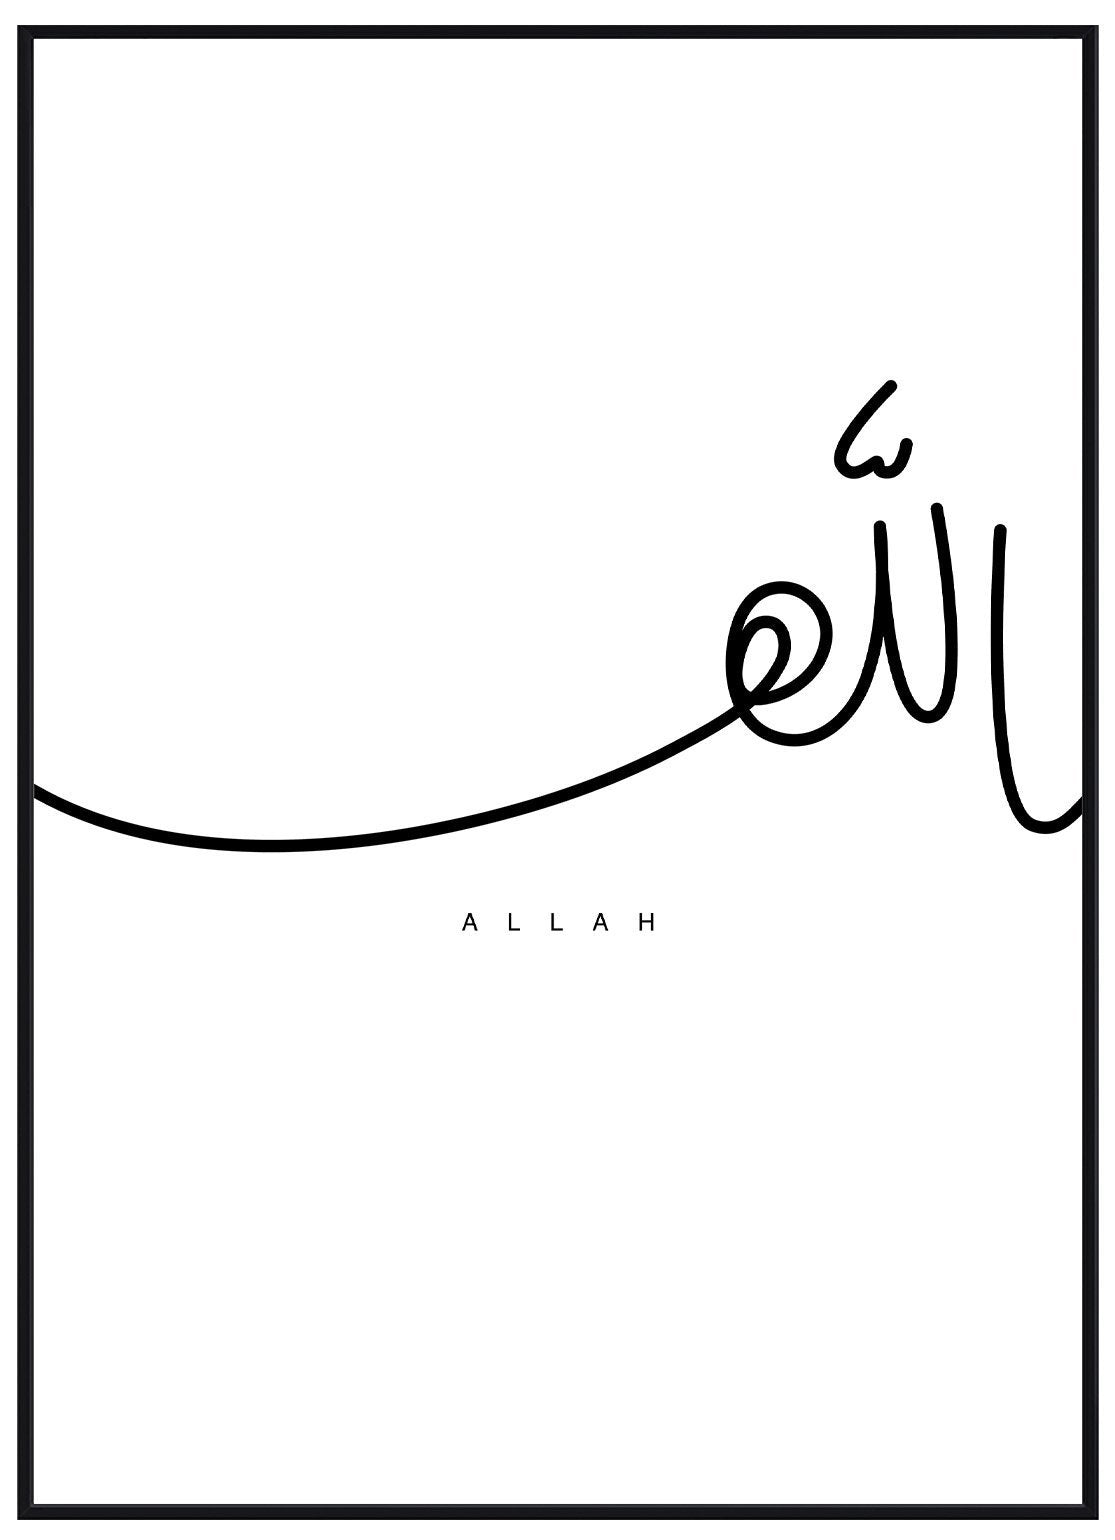 Allah Kalligraphie - Avemfactory